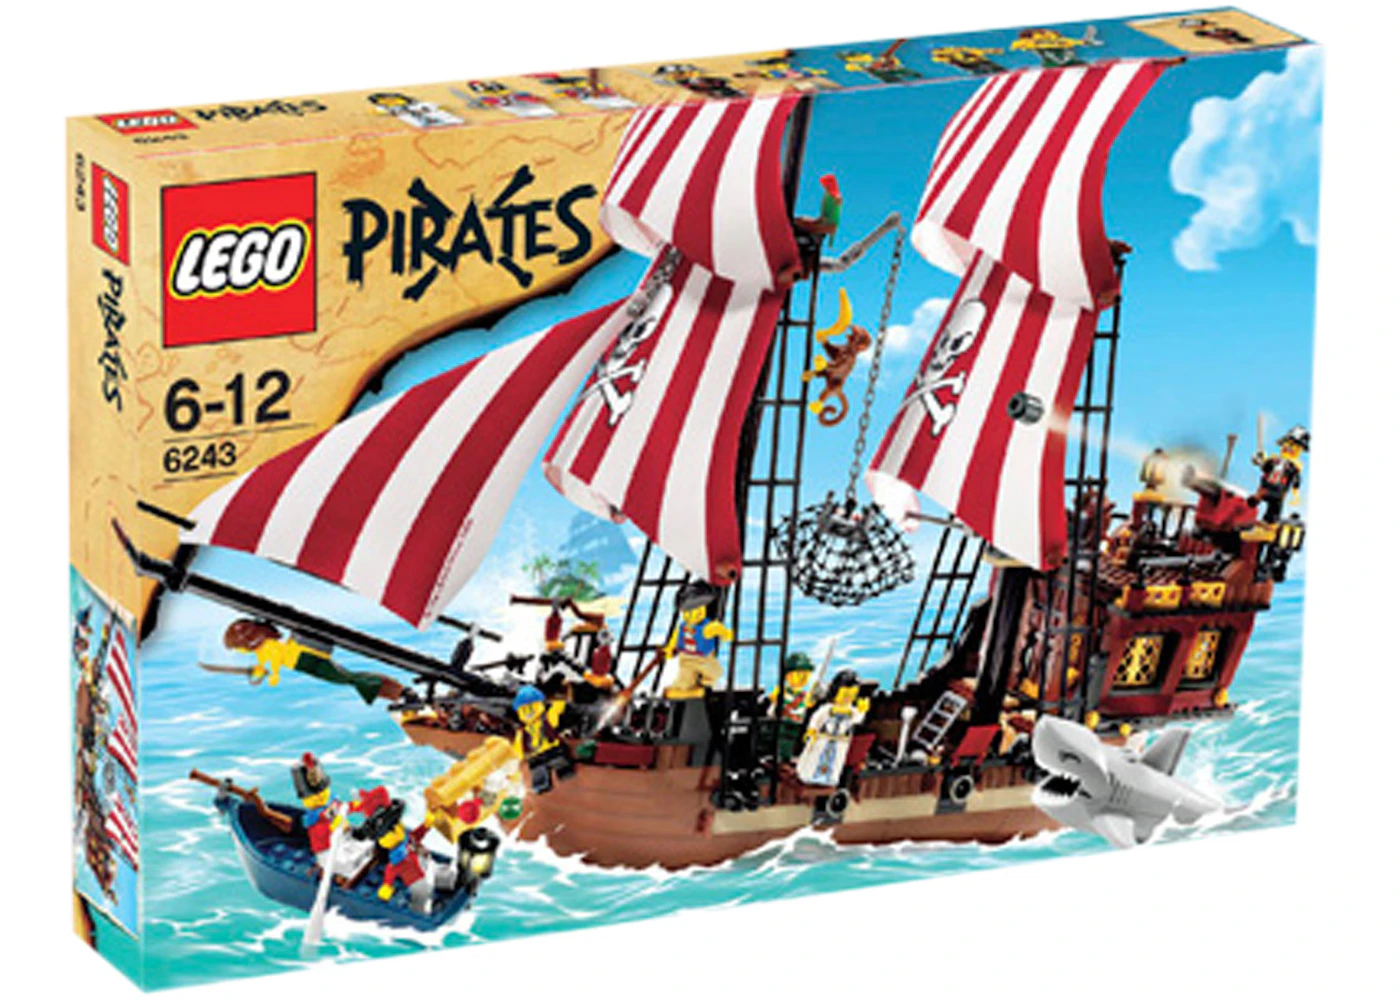 https://images.stockx.com/images/LEGO-Pirates-Brickbeards-Bounty-Set-6243.jpg?fit=fill&bg=FFFFFF&w=700&h=500&fm=webp&auto=compress&q=90&dpr=2&trim=color&updated_at=1643060539